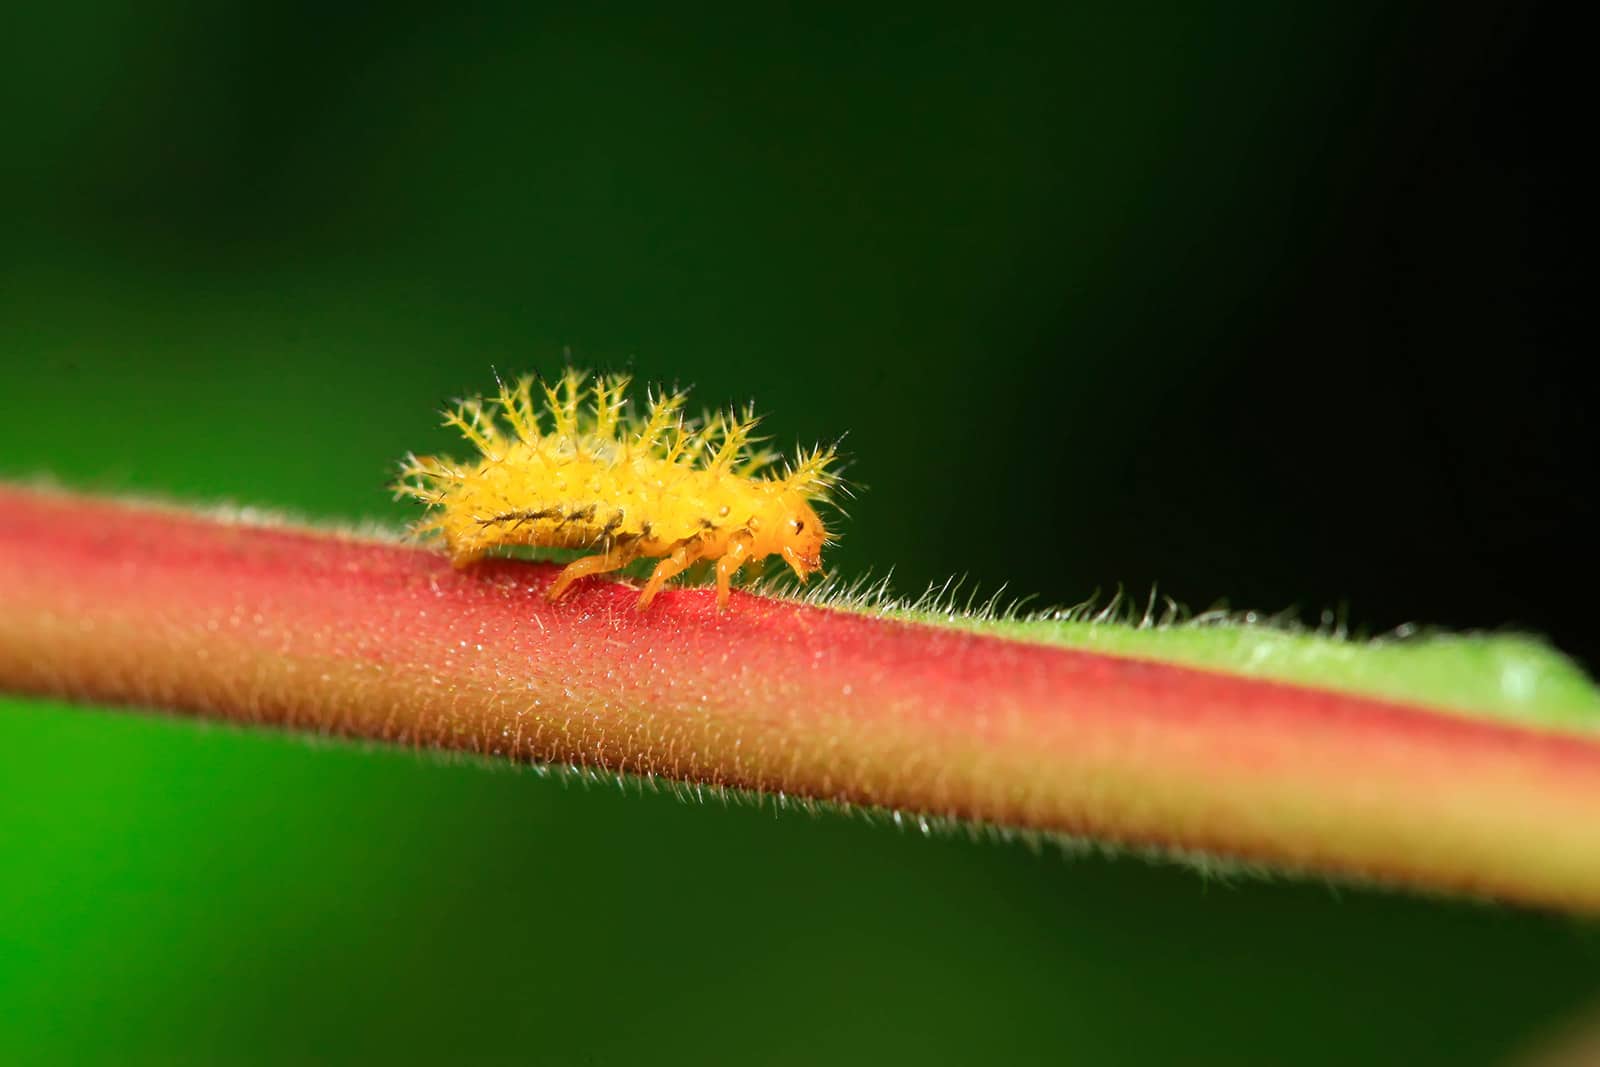 Close-up of yellow ladybug larva on a red stem